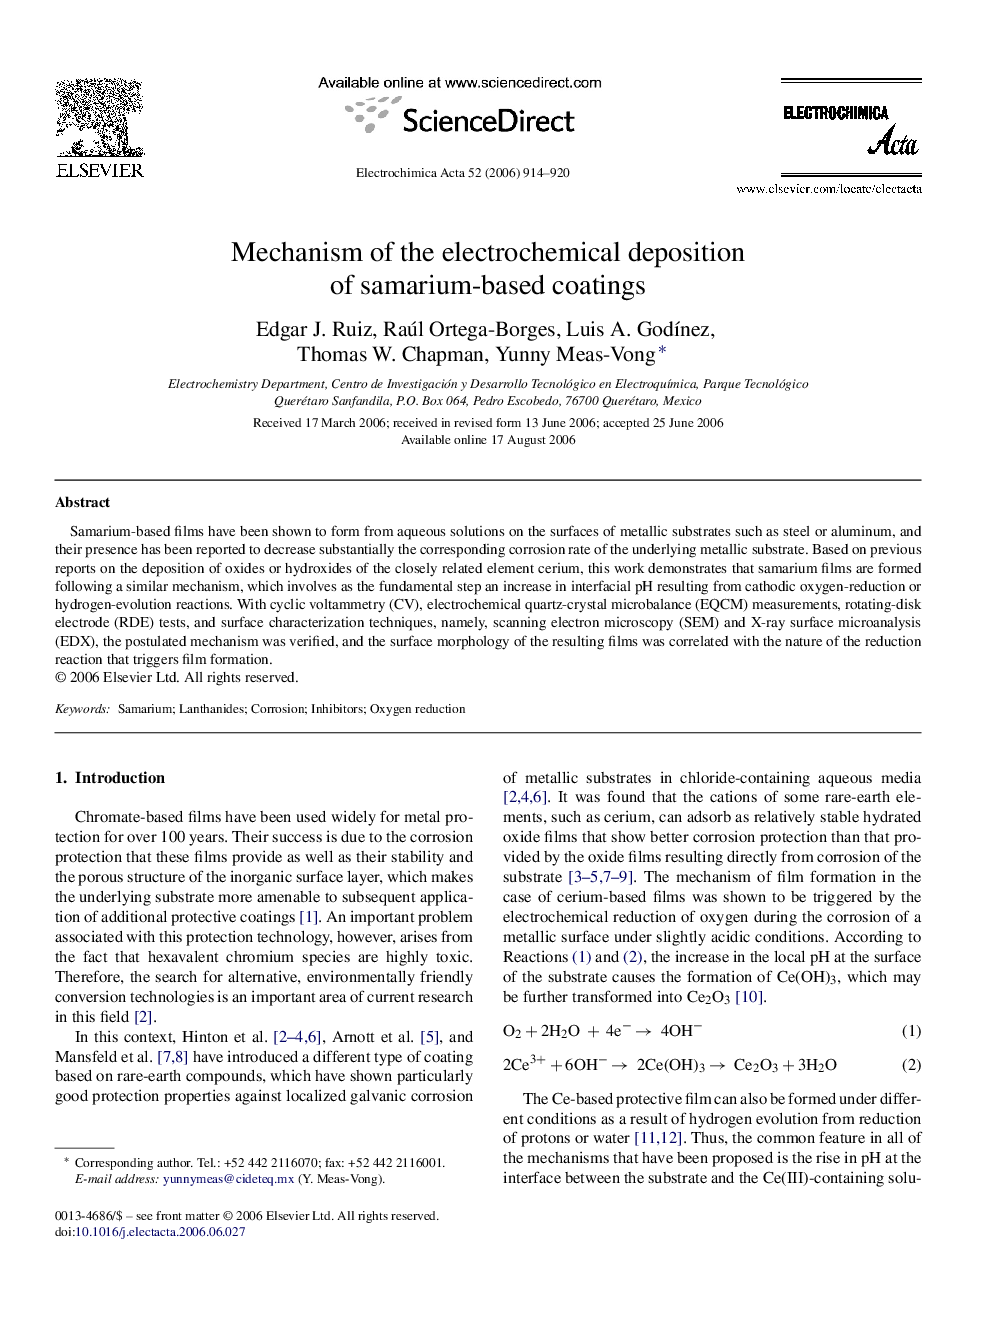 Mechanism of the electrochemical deposition of samarium-based coatings